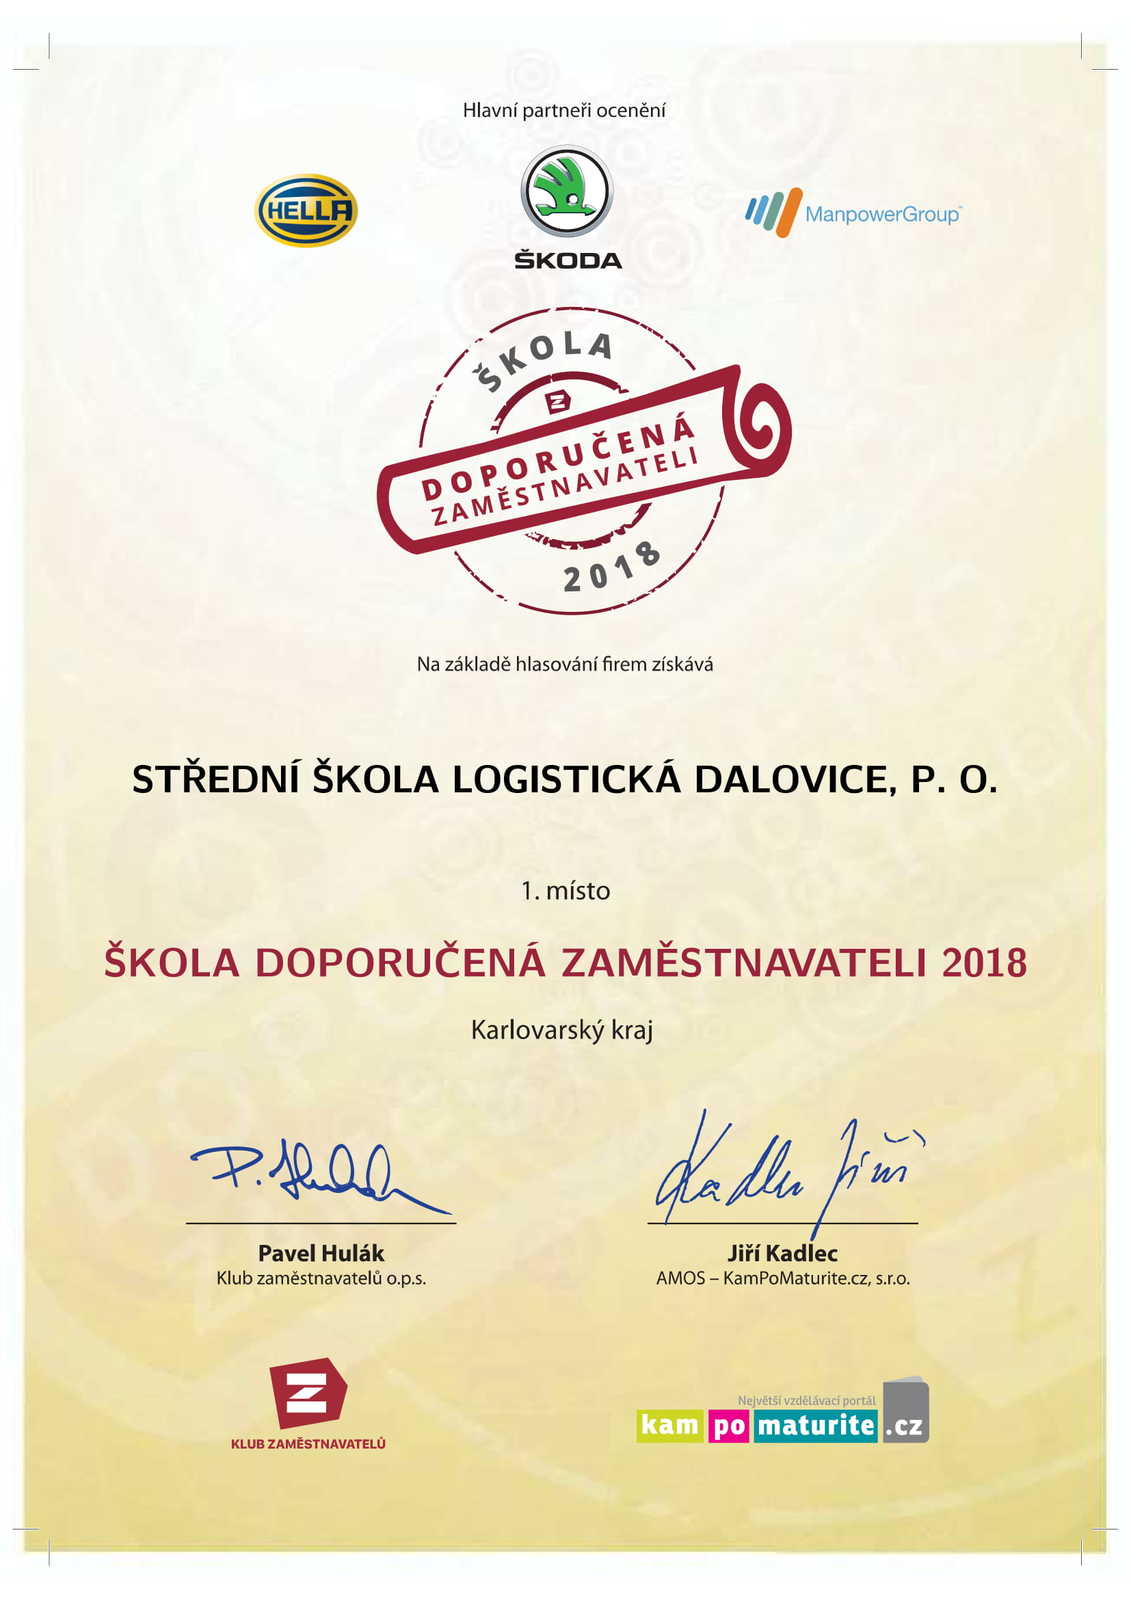 Diplom - Škola doporučená zaměstnavateli 2018.jpg